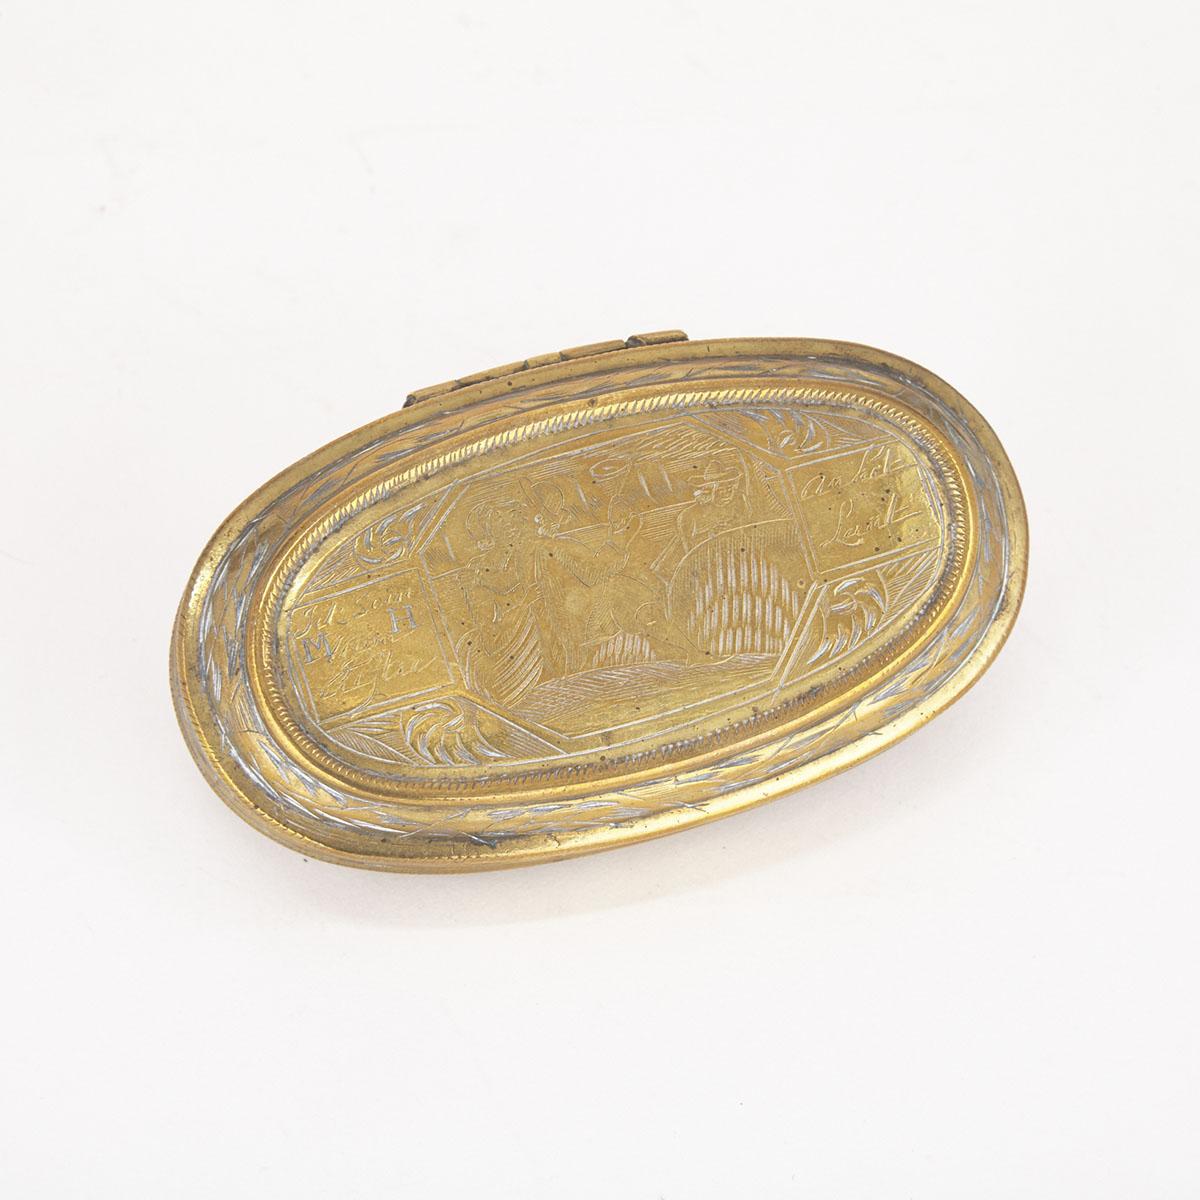 Dutch Oval Engraved Brass Tobacco Box, 18th century